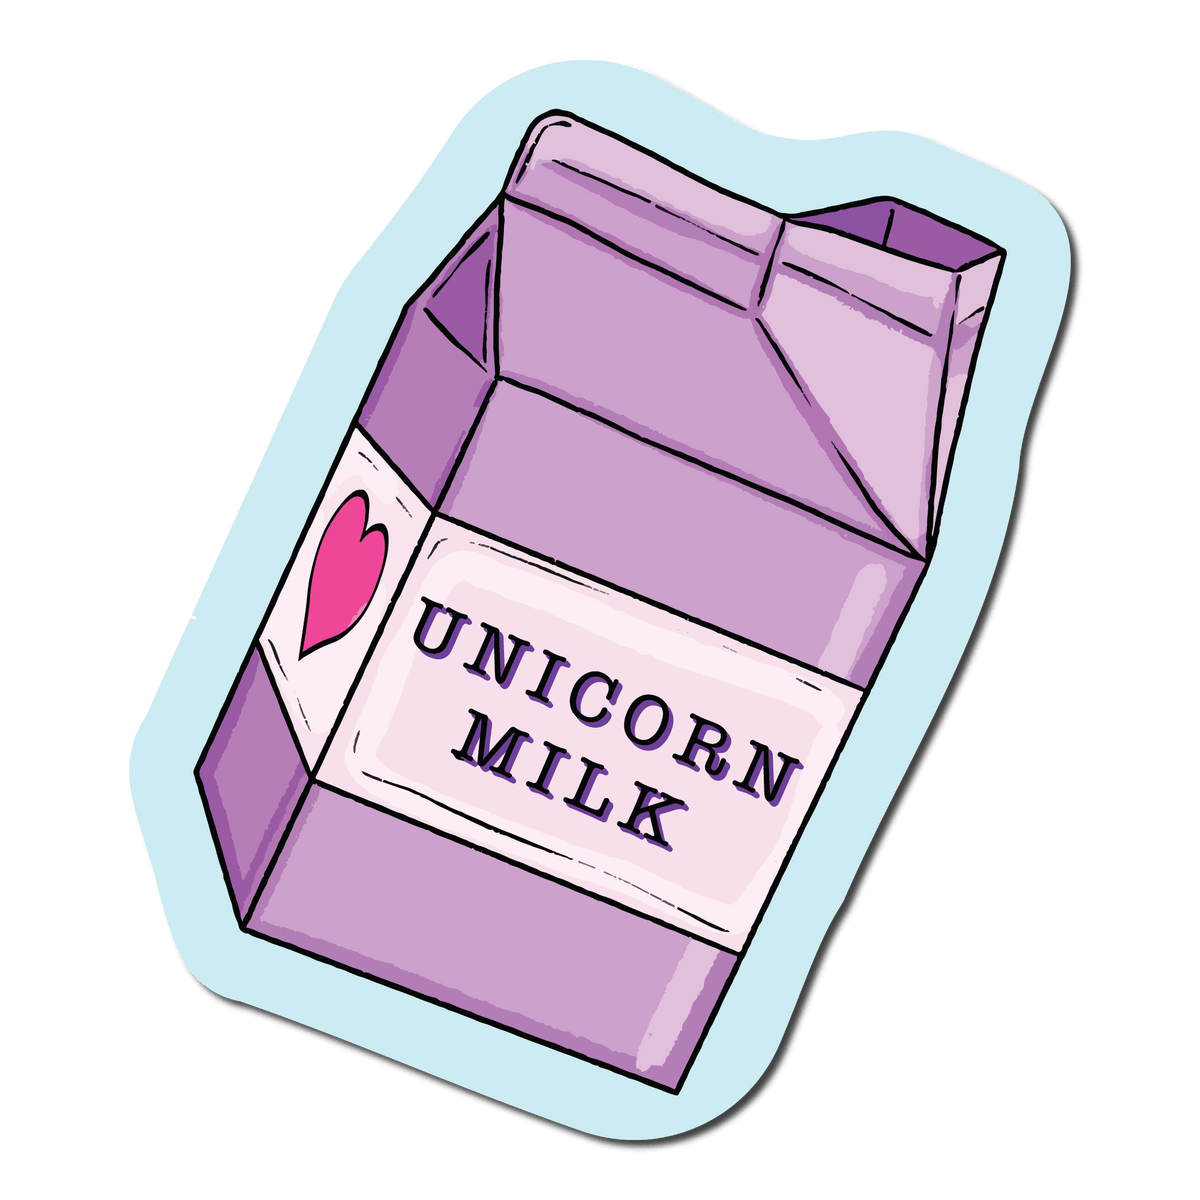 Small Sticker of a purple milk carton that says unicorn milk